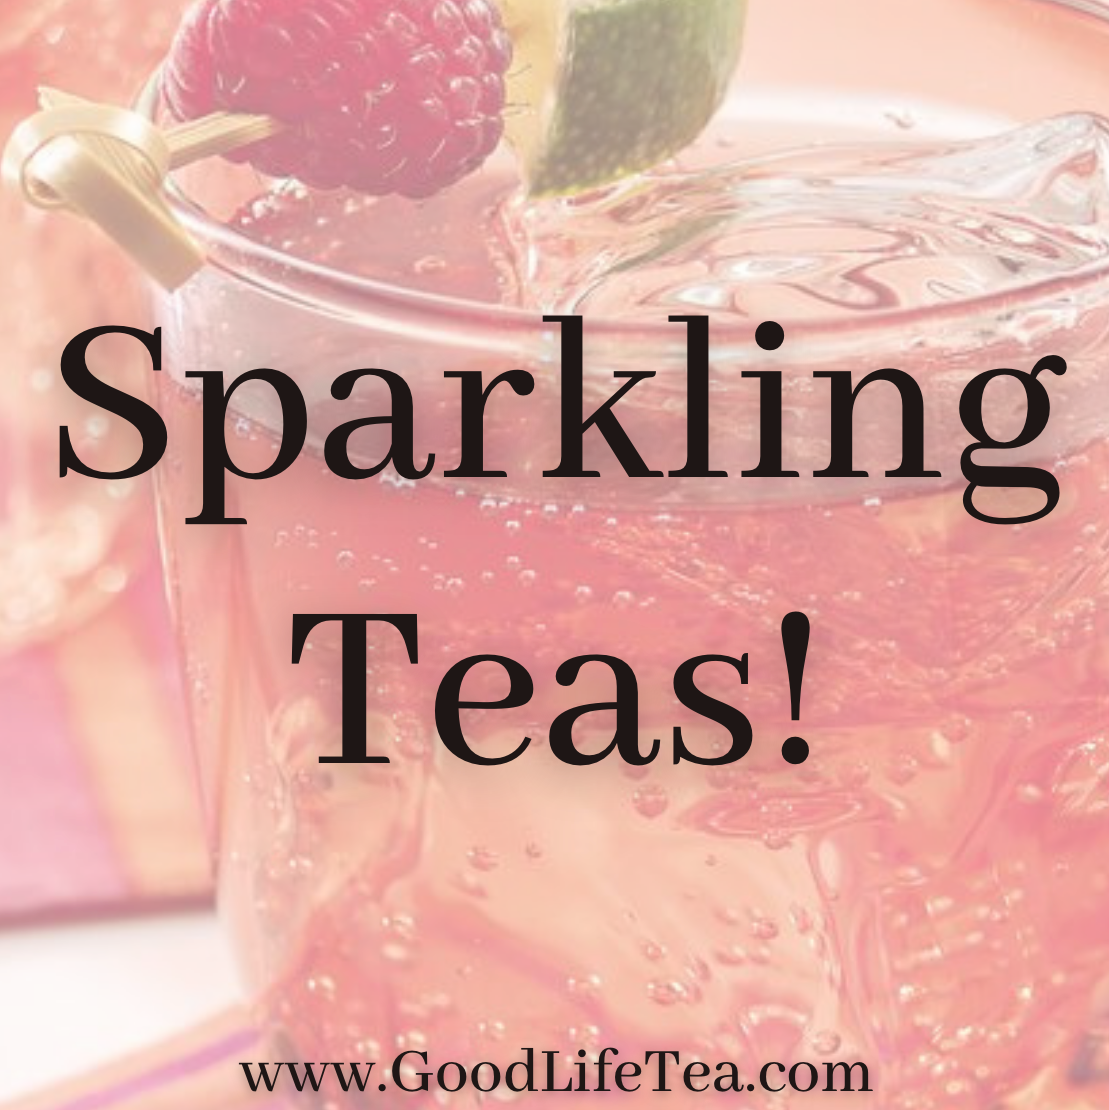 Sparkling Teas!